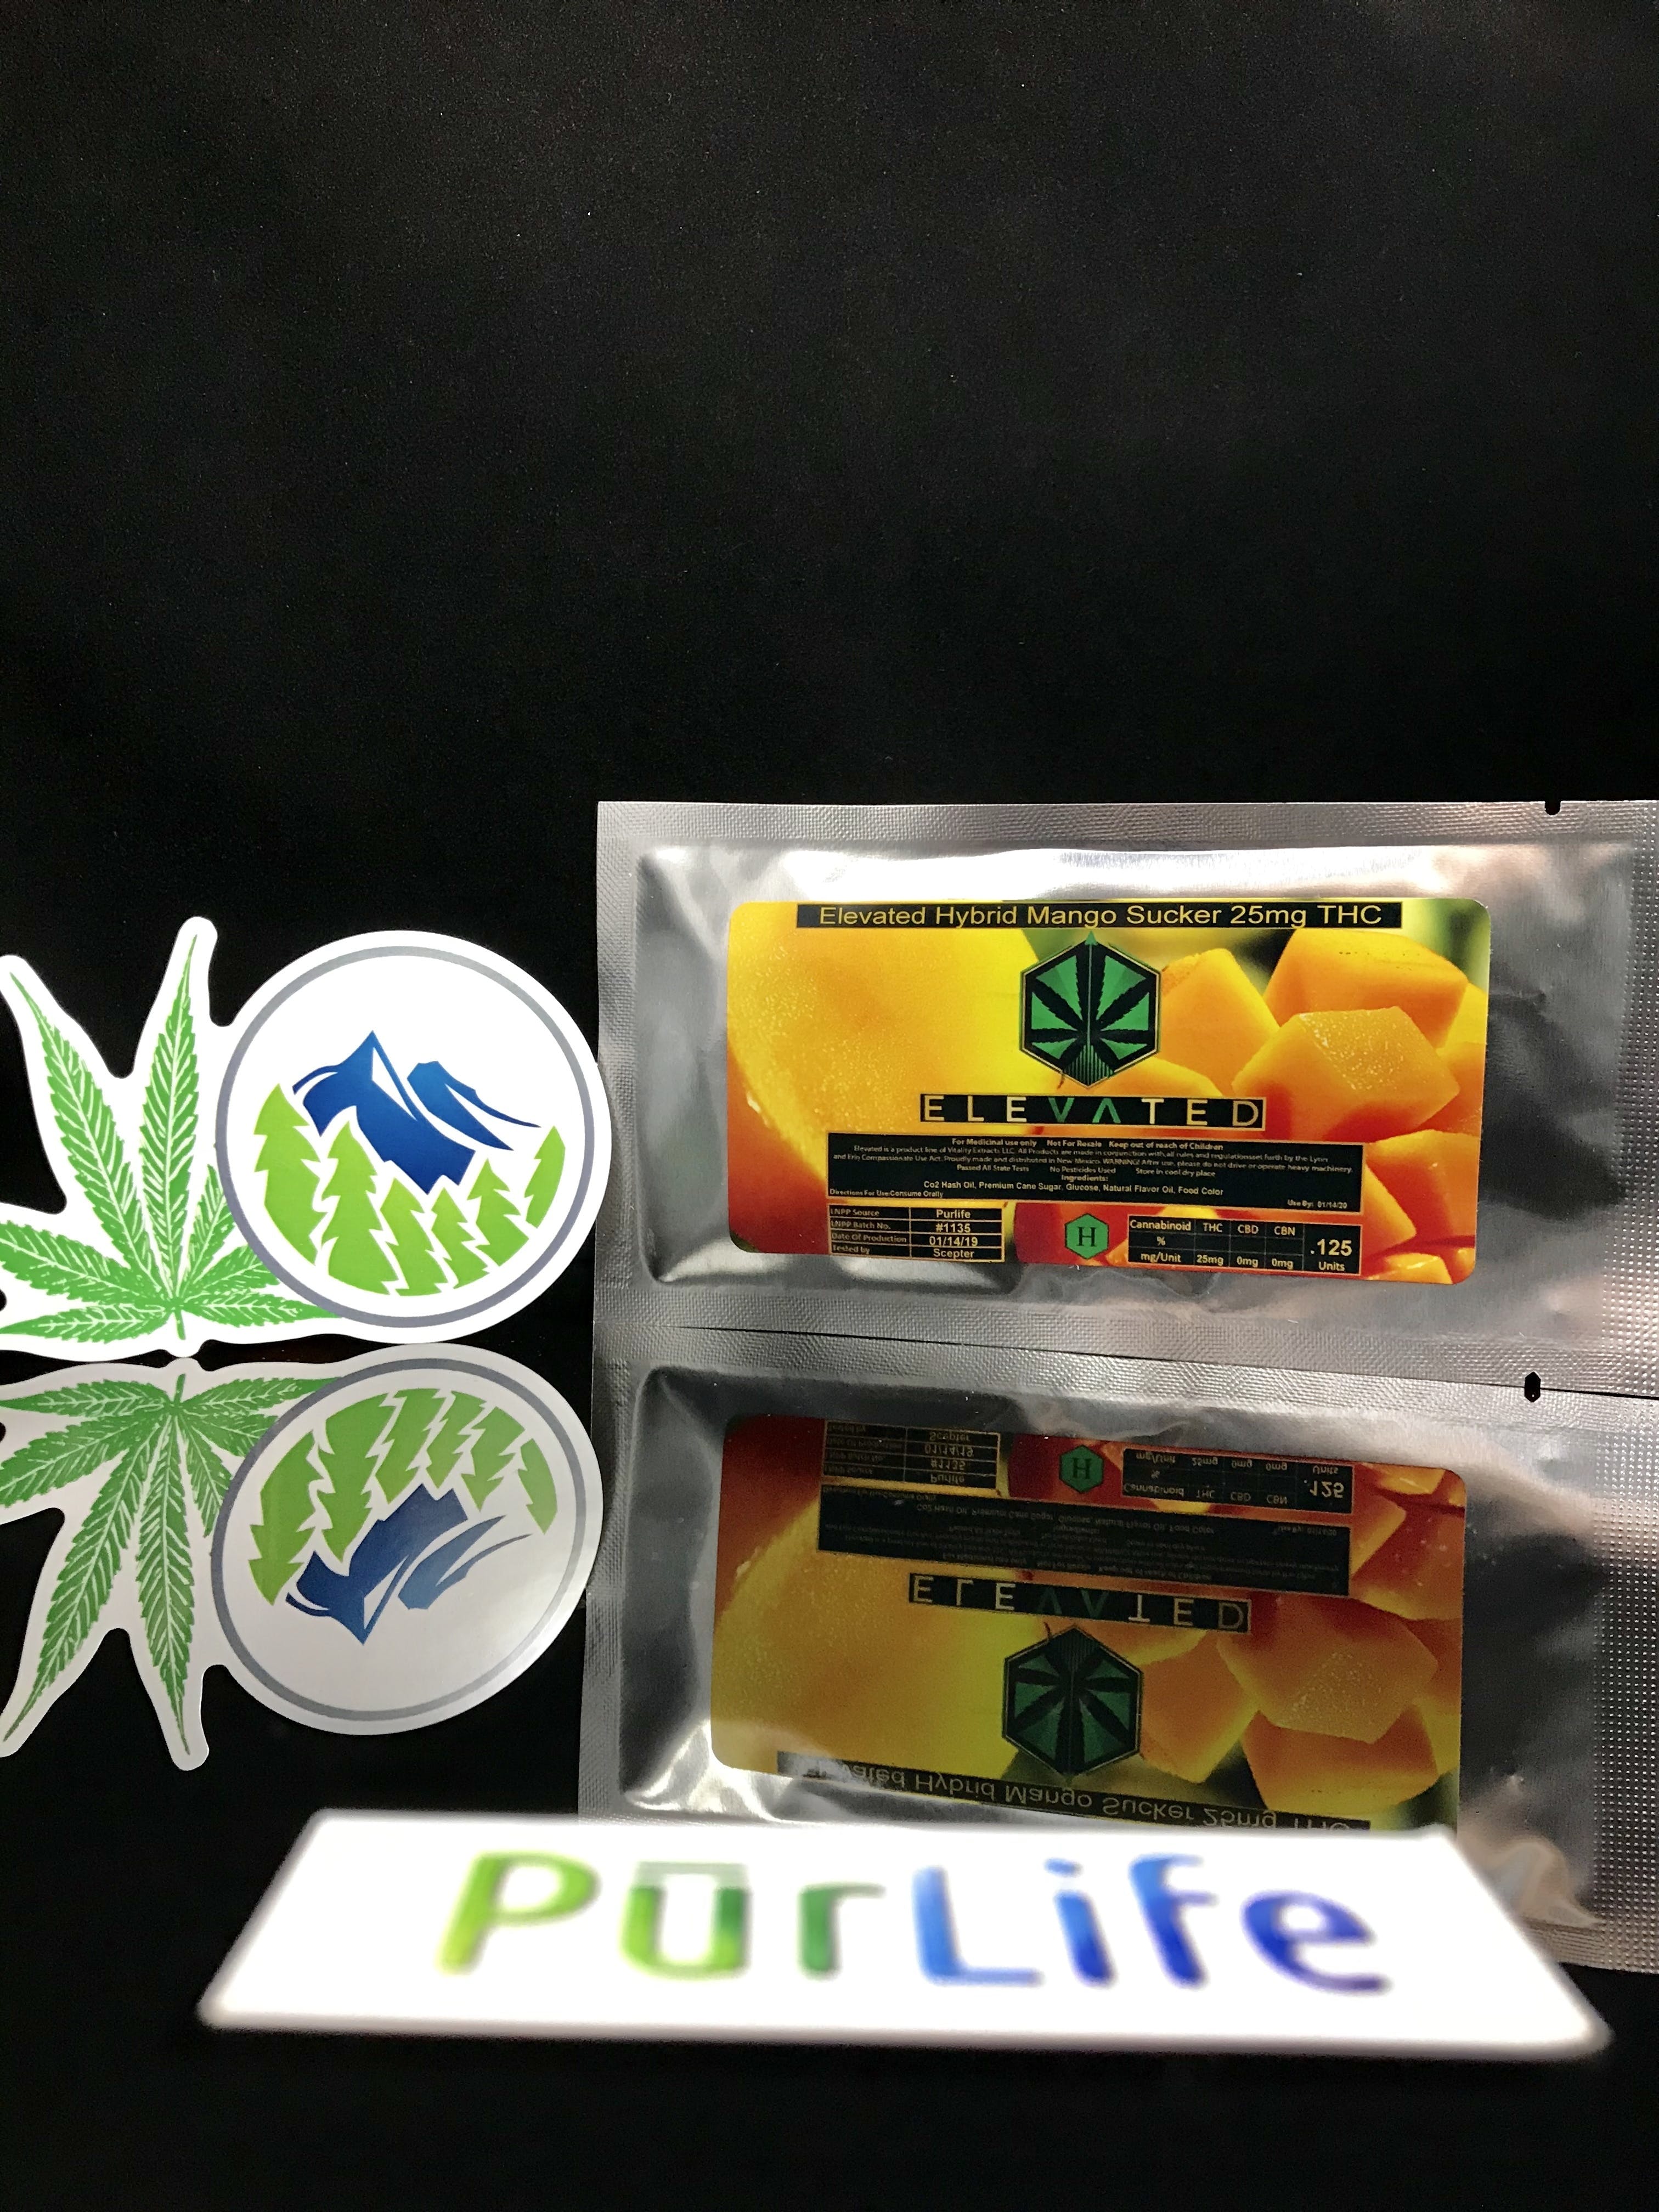 marijuana-dispensaries-9800-montgomery-blvd-ne-239-albuquerque-elevated-sucker-25mg-hybrid-mango